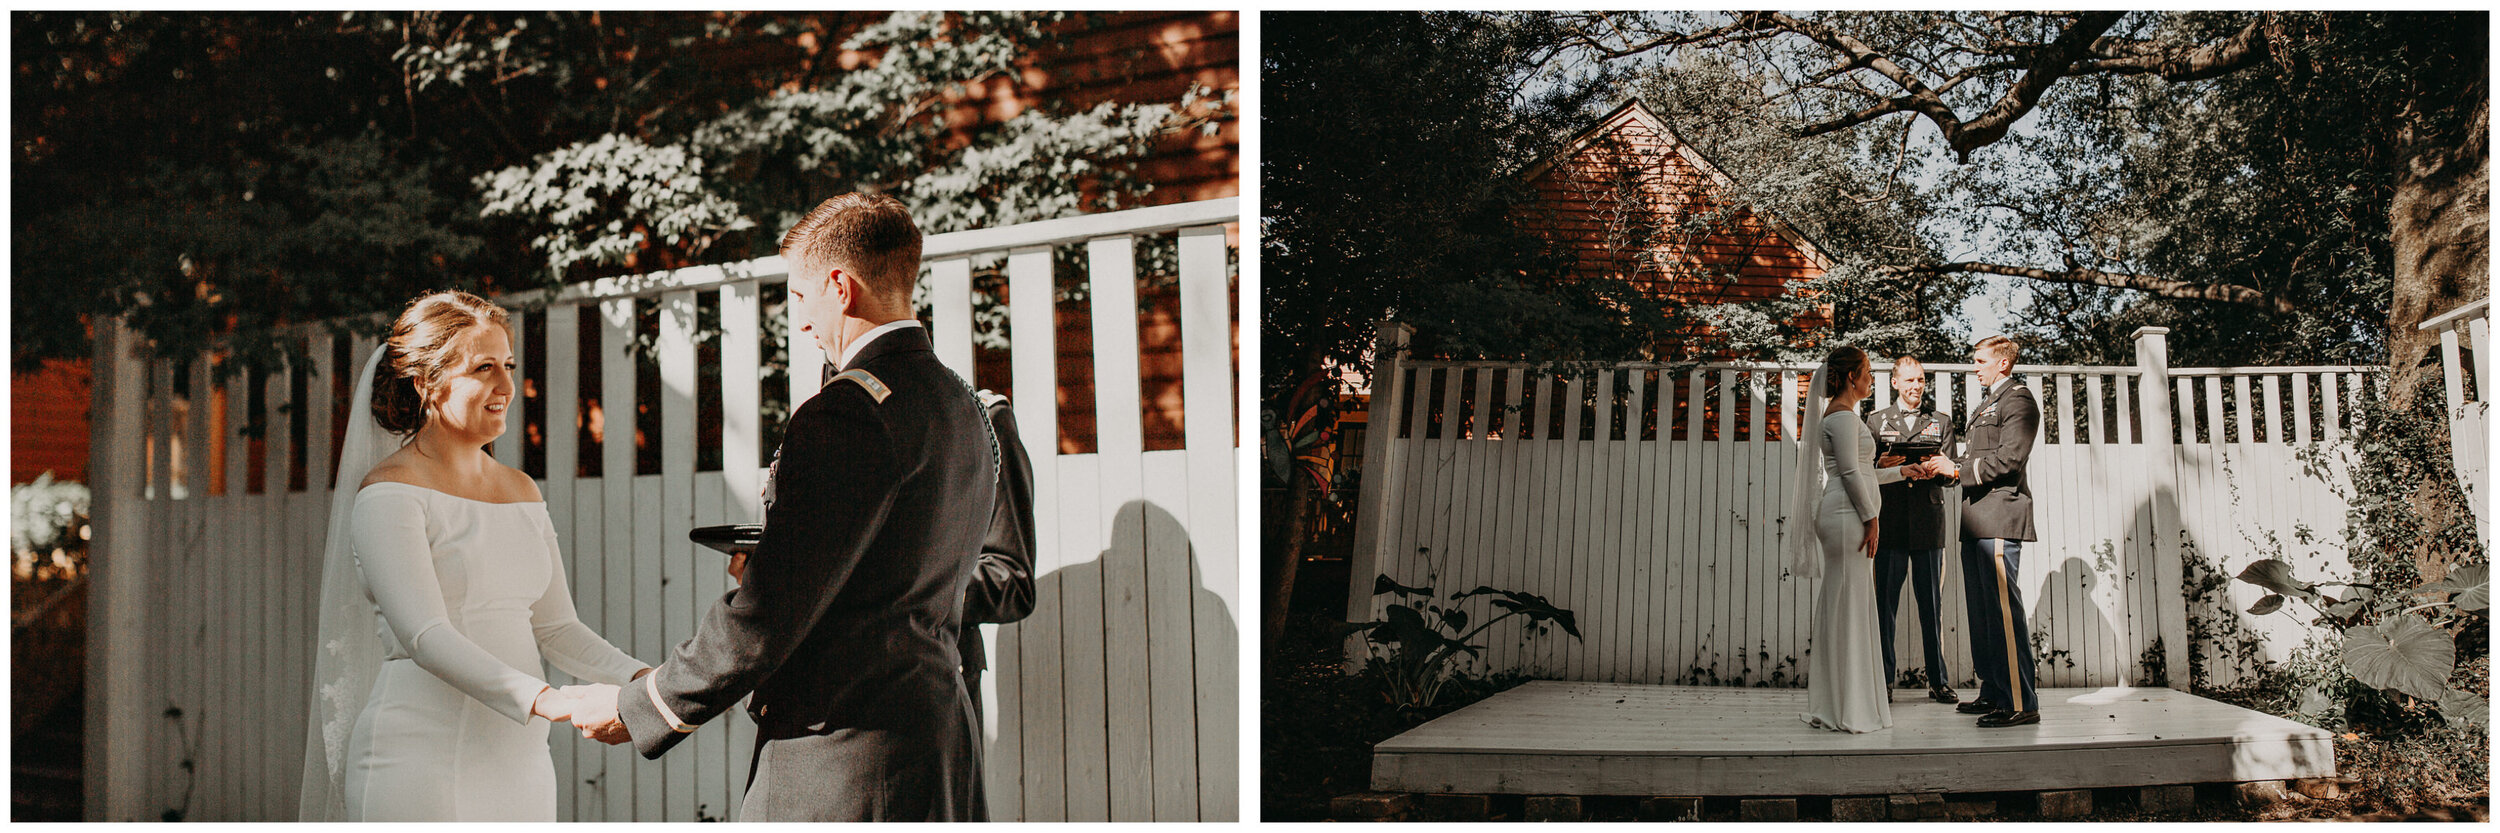 Katie_Tyler_Aline Marin Photography - Atlanta-Ga_intimate_wedding_photographer23.jpg